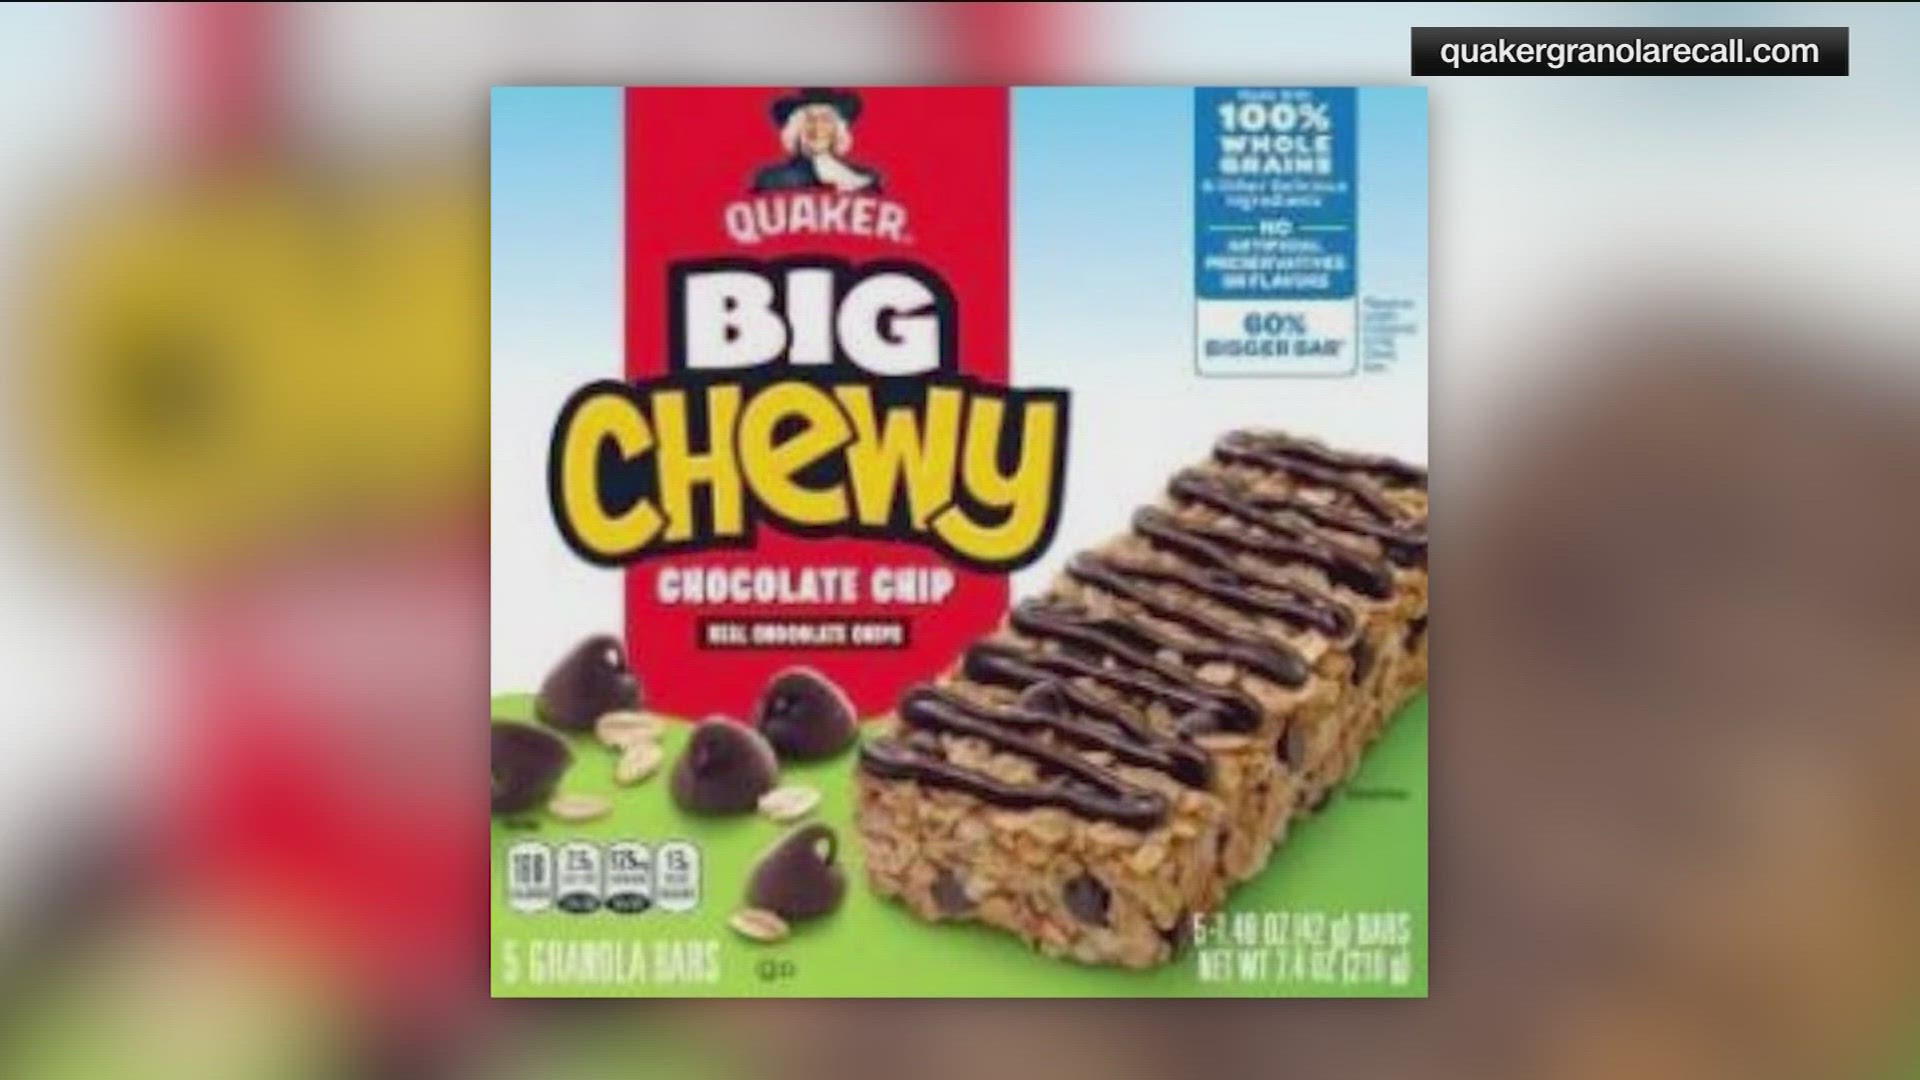 FDA Recall: Quaker Granola Bars, Cereals Could Be Contaminated with  Salmonella